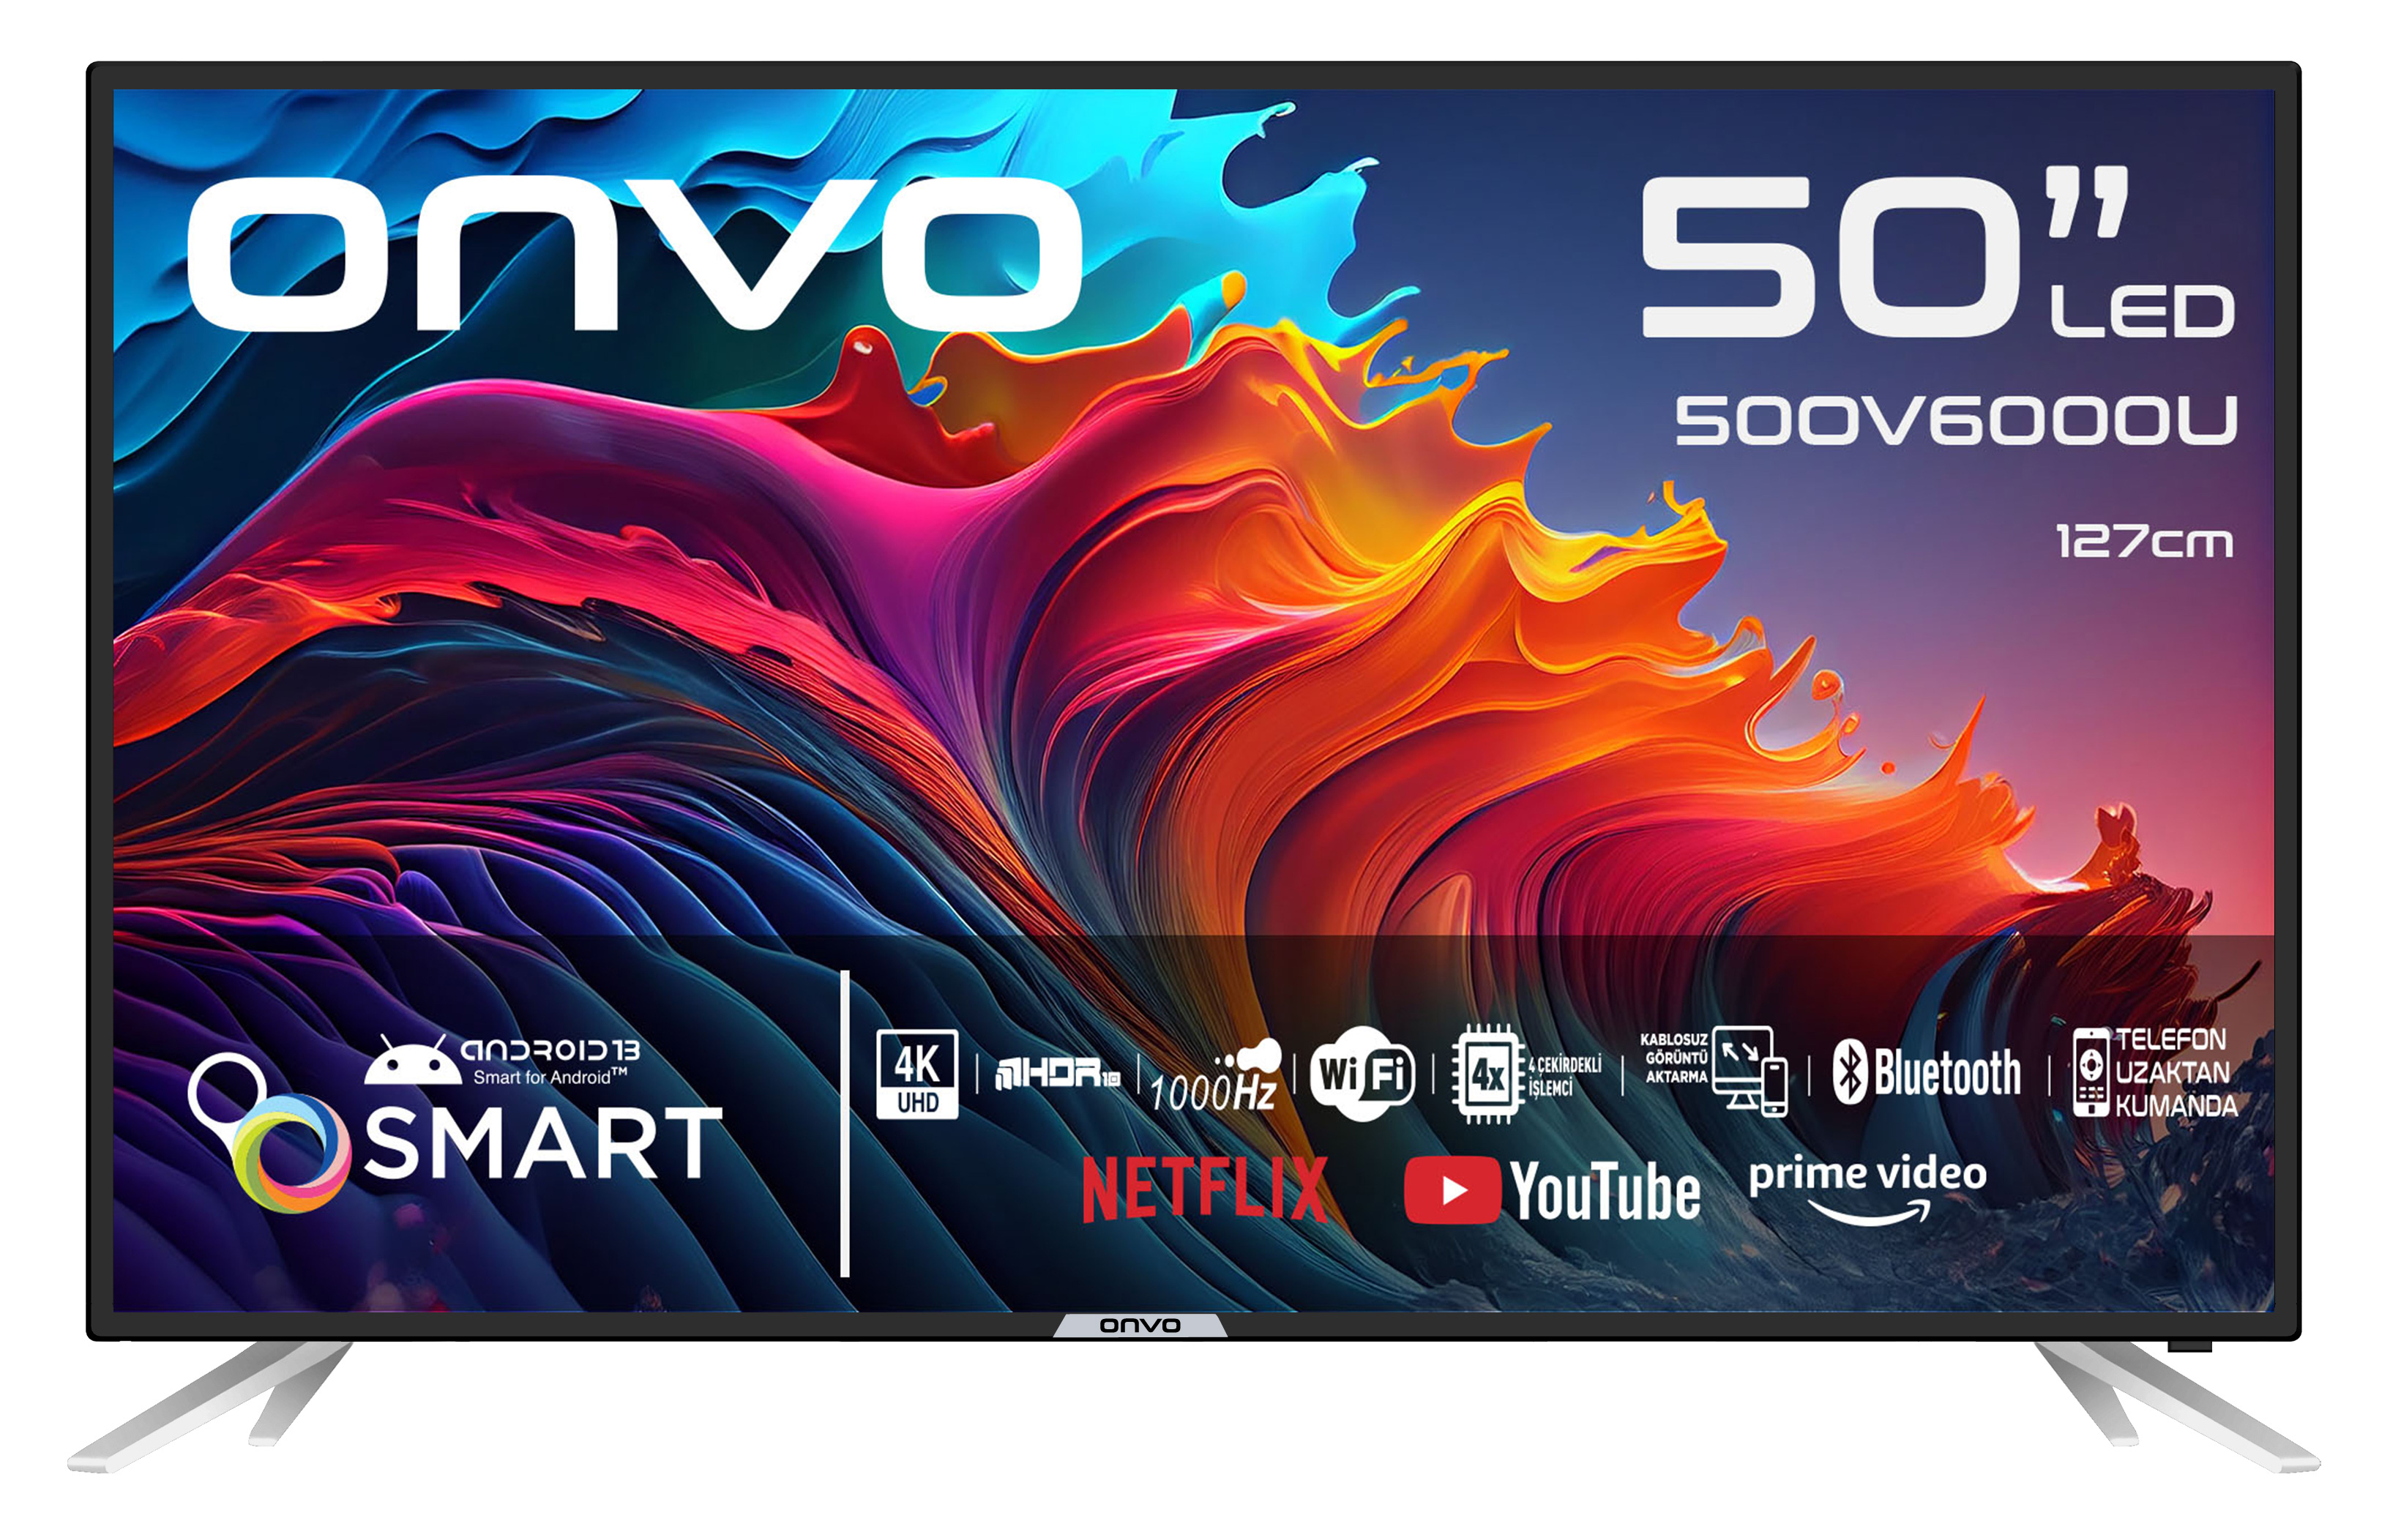 Onvo 50OV6000U 50" 4K Ultra HD Android Smart LED TV